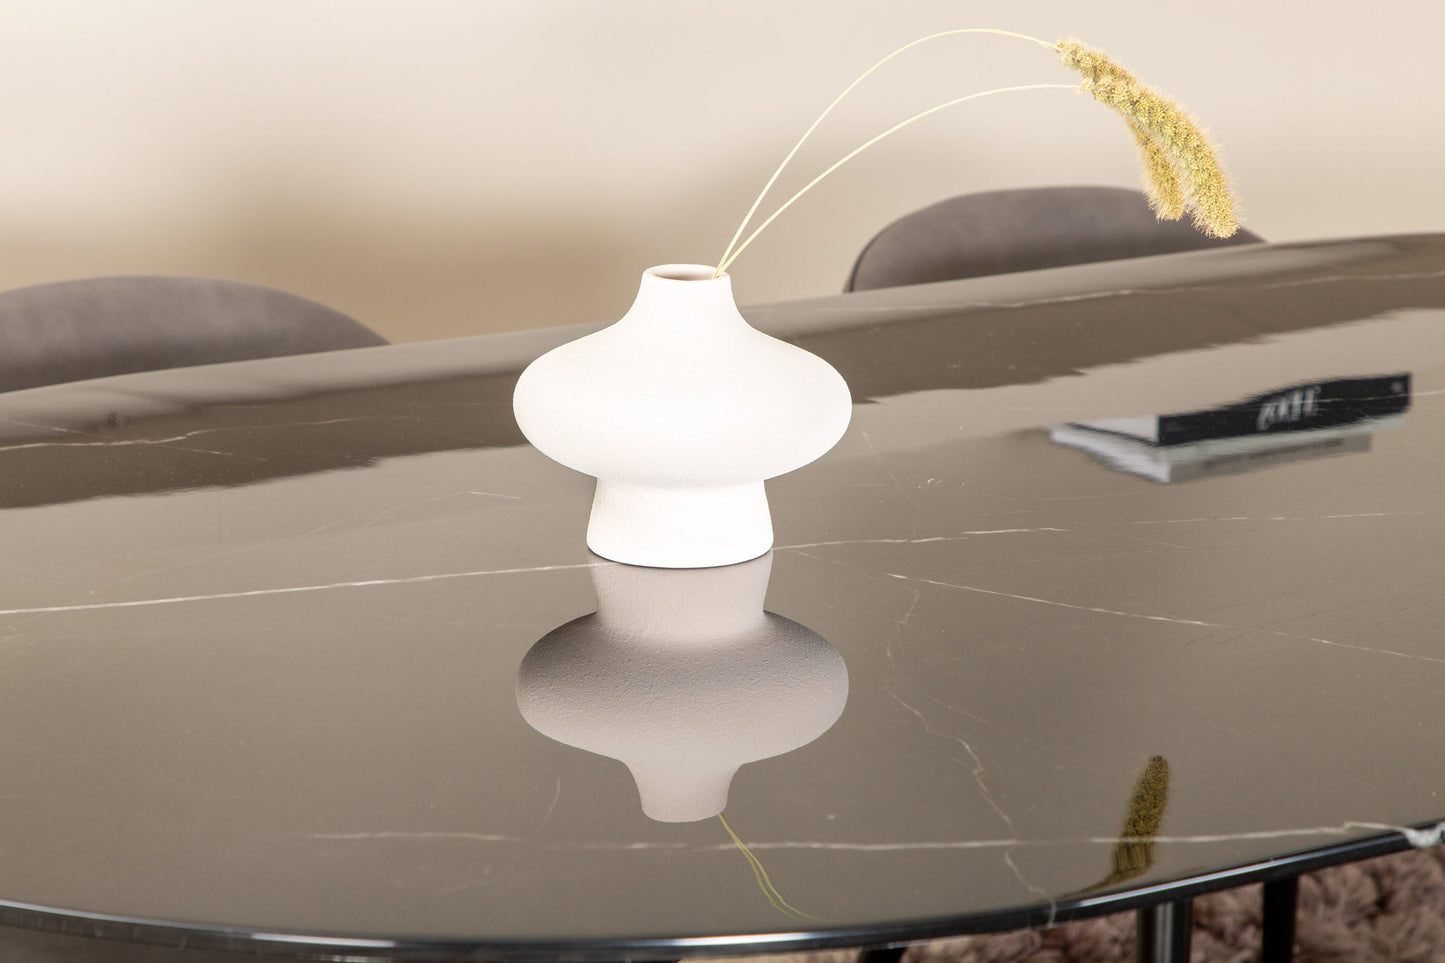 Pillan - Ovalt spisebord, Sort glas Marmor+ velour syninger Stol - Sort / Grå mikrofiber